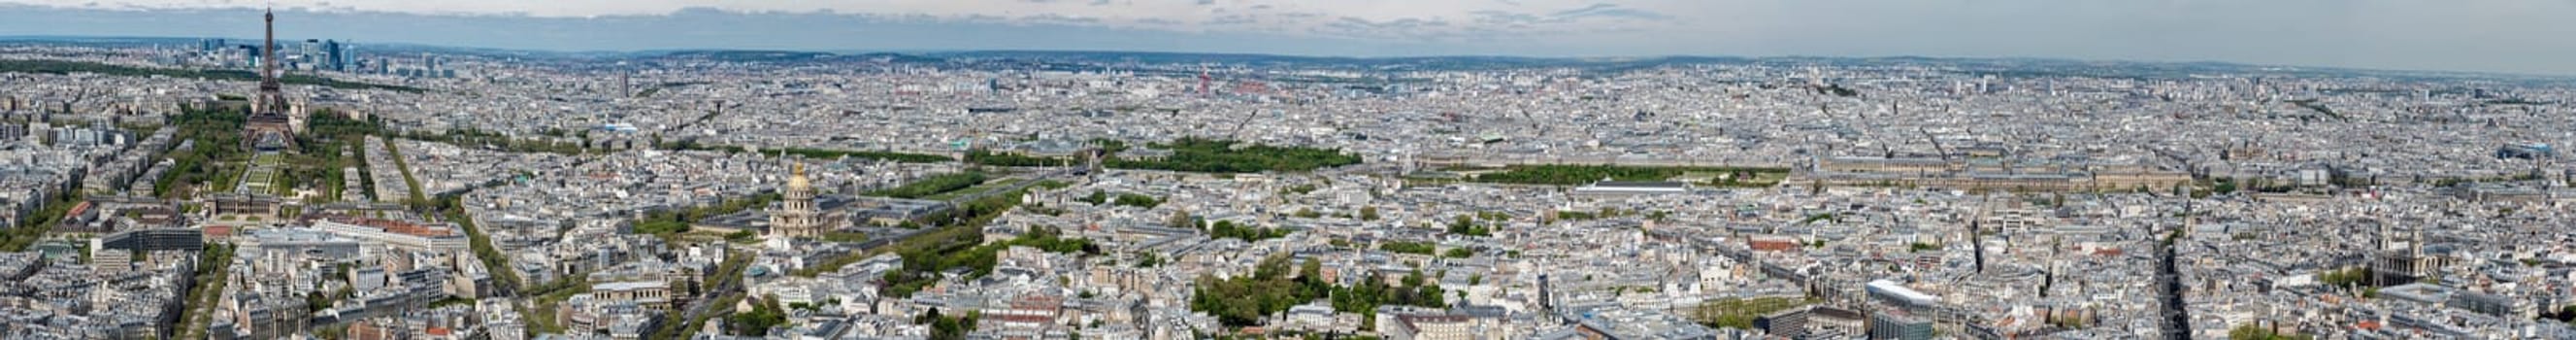 paris cityscape aerial landscape huge panorama